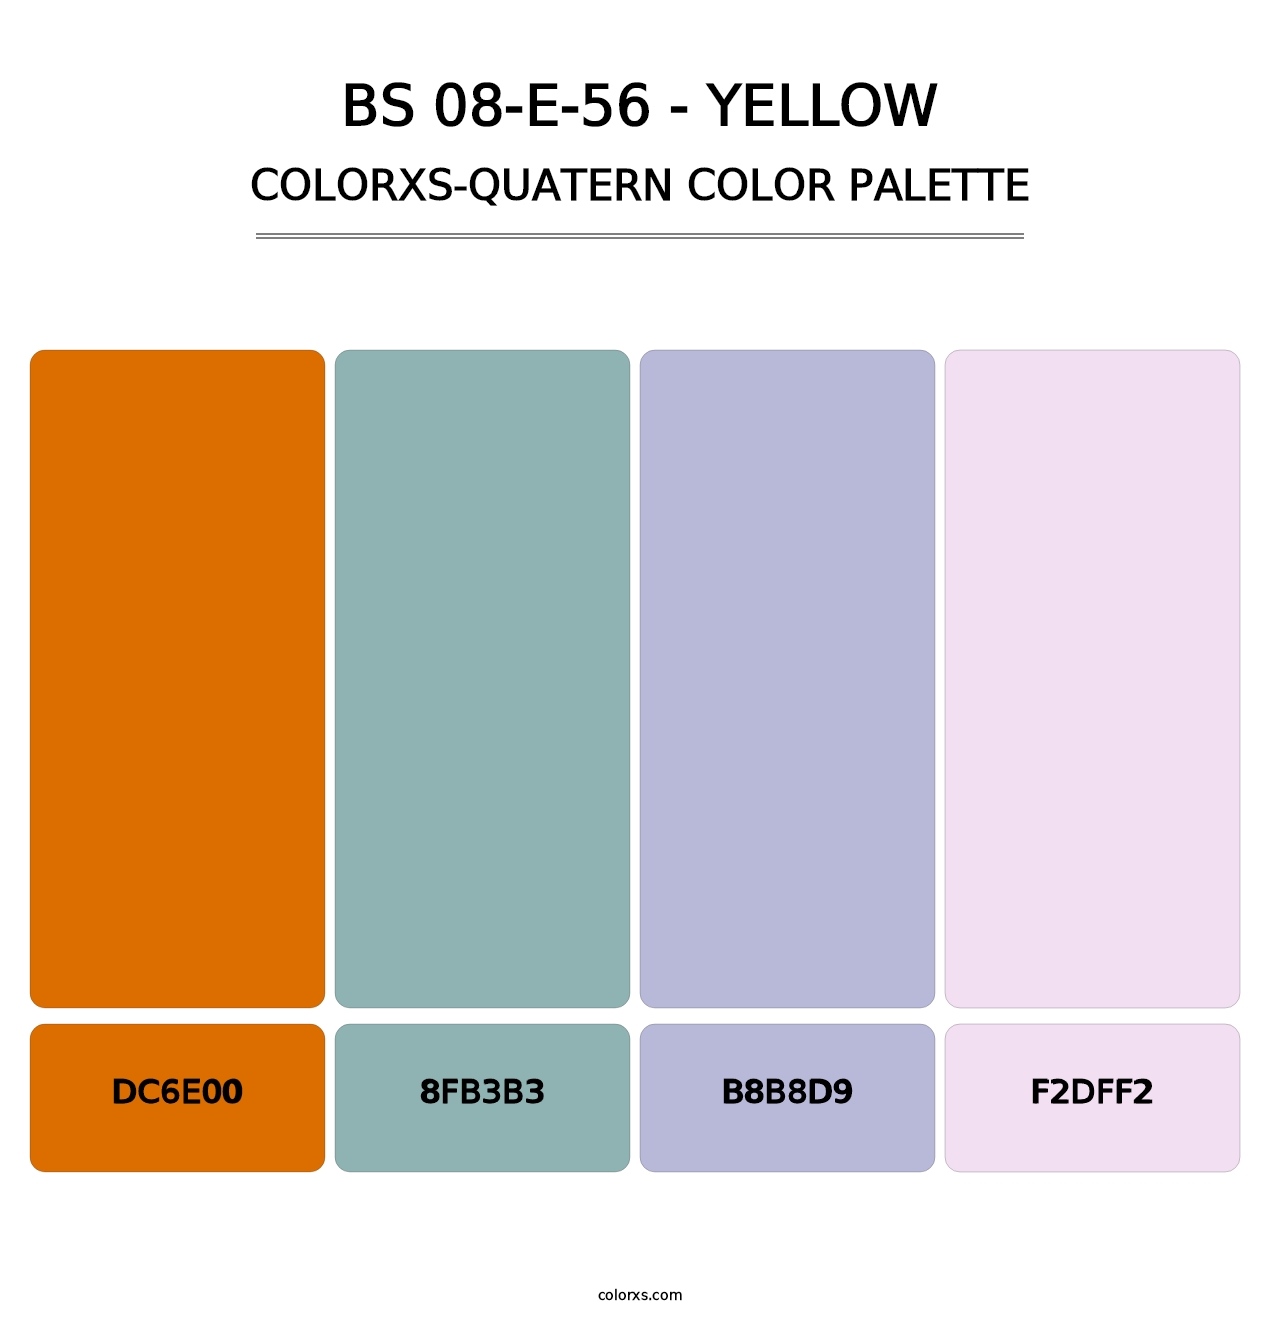 BS 08-E-56 - Yellow - Colorxs Quatern Palette